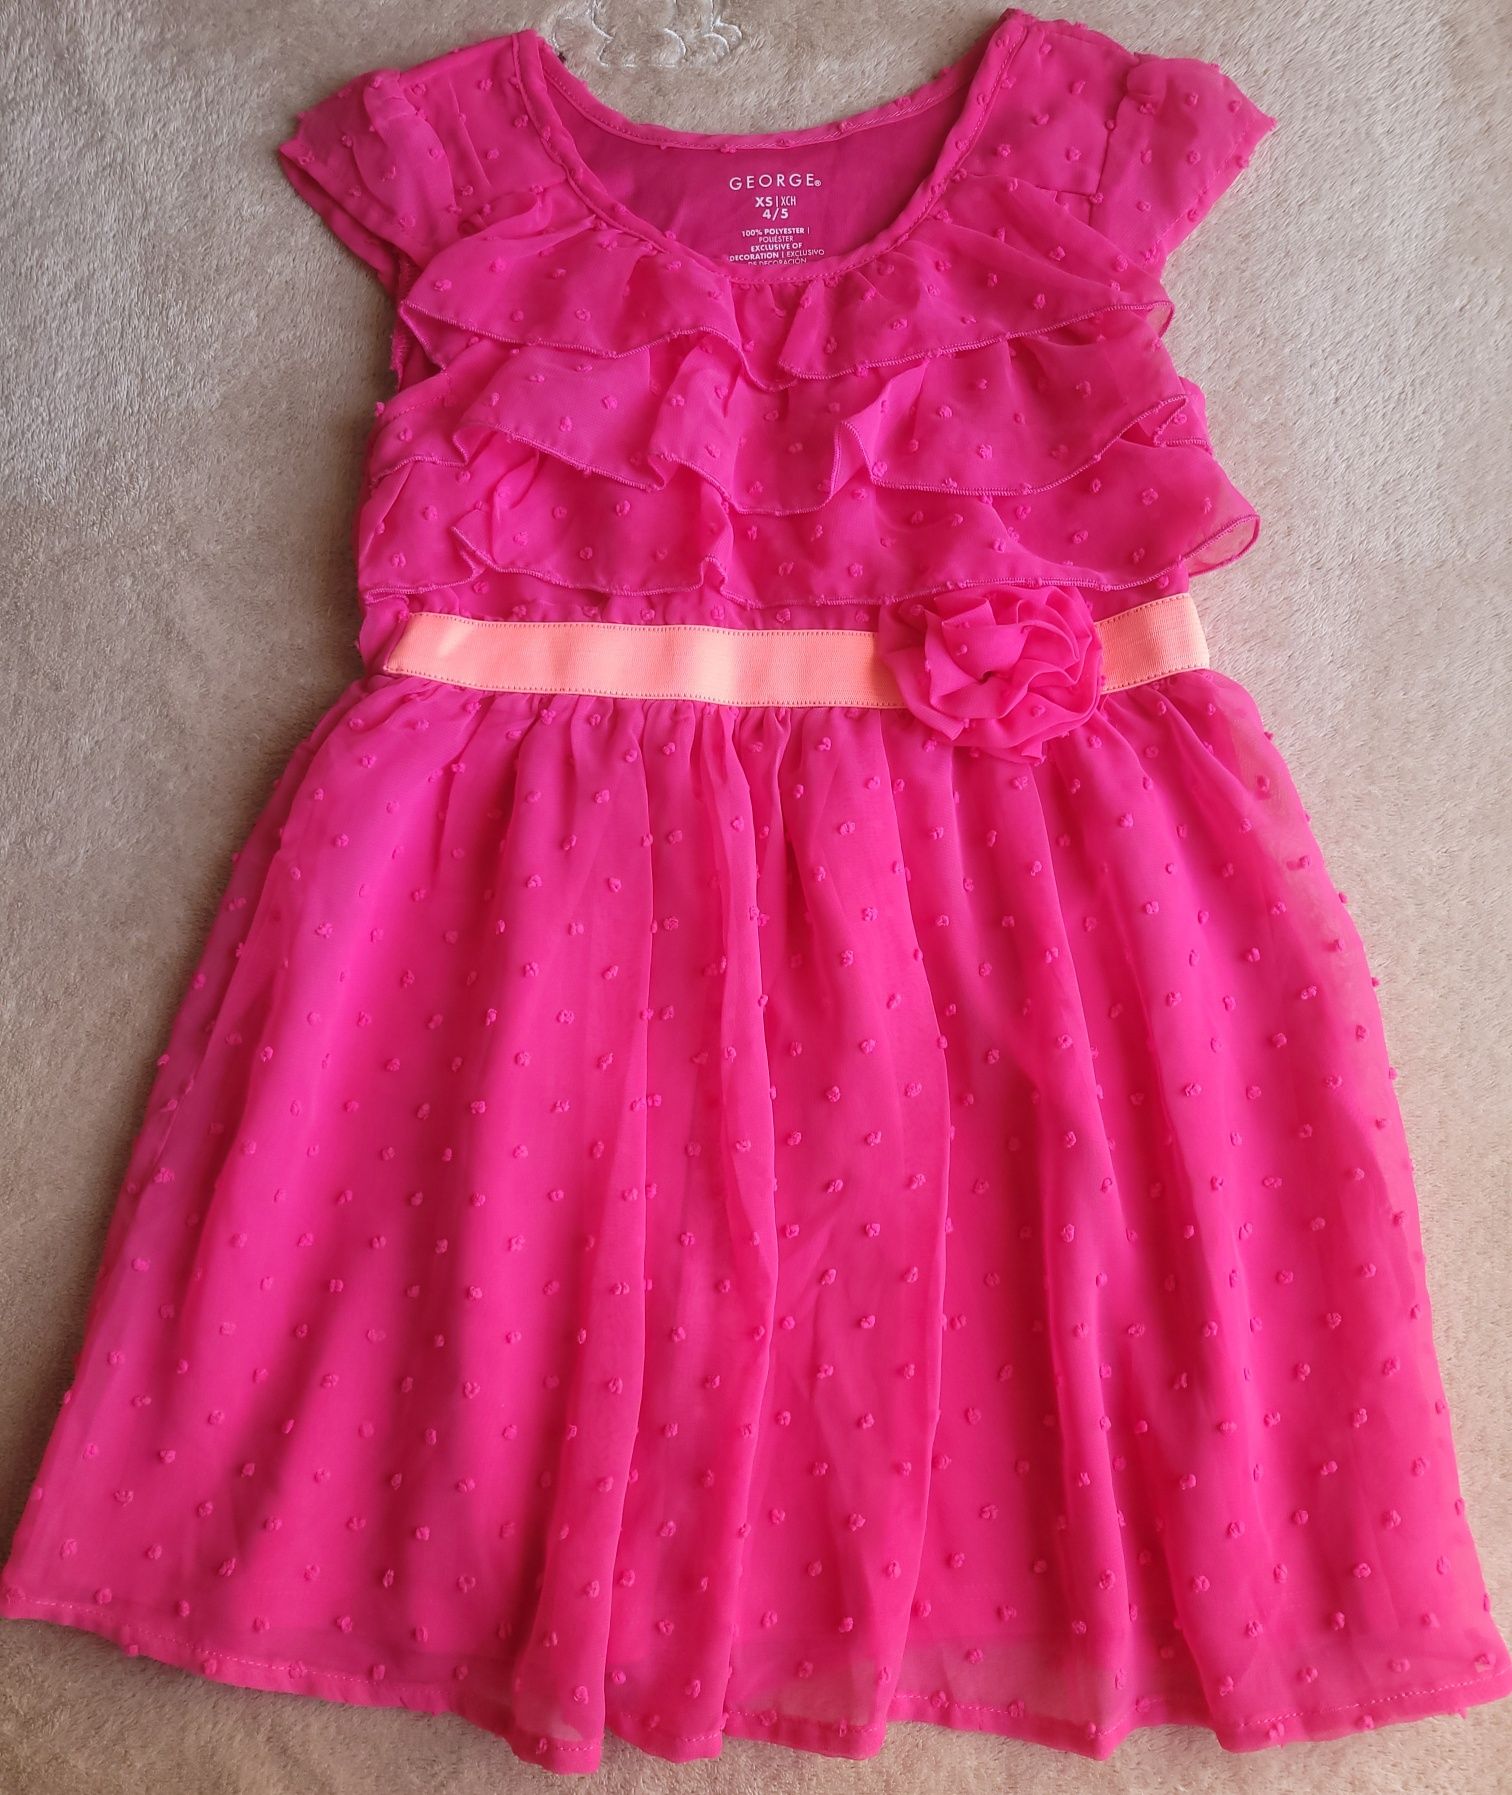 Нарядное летнее платье George (Джордж), р. XS (4-5 лет), ярко розовое